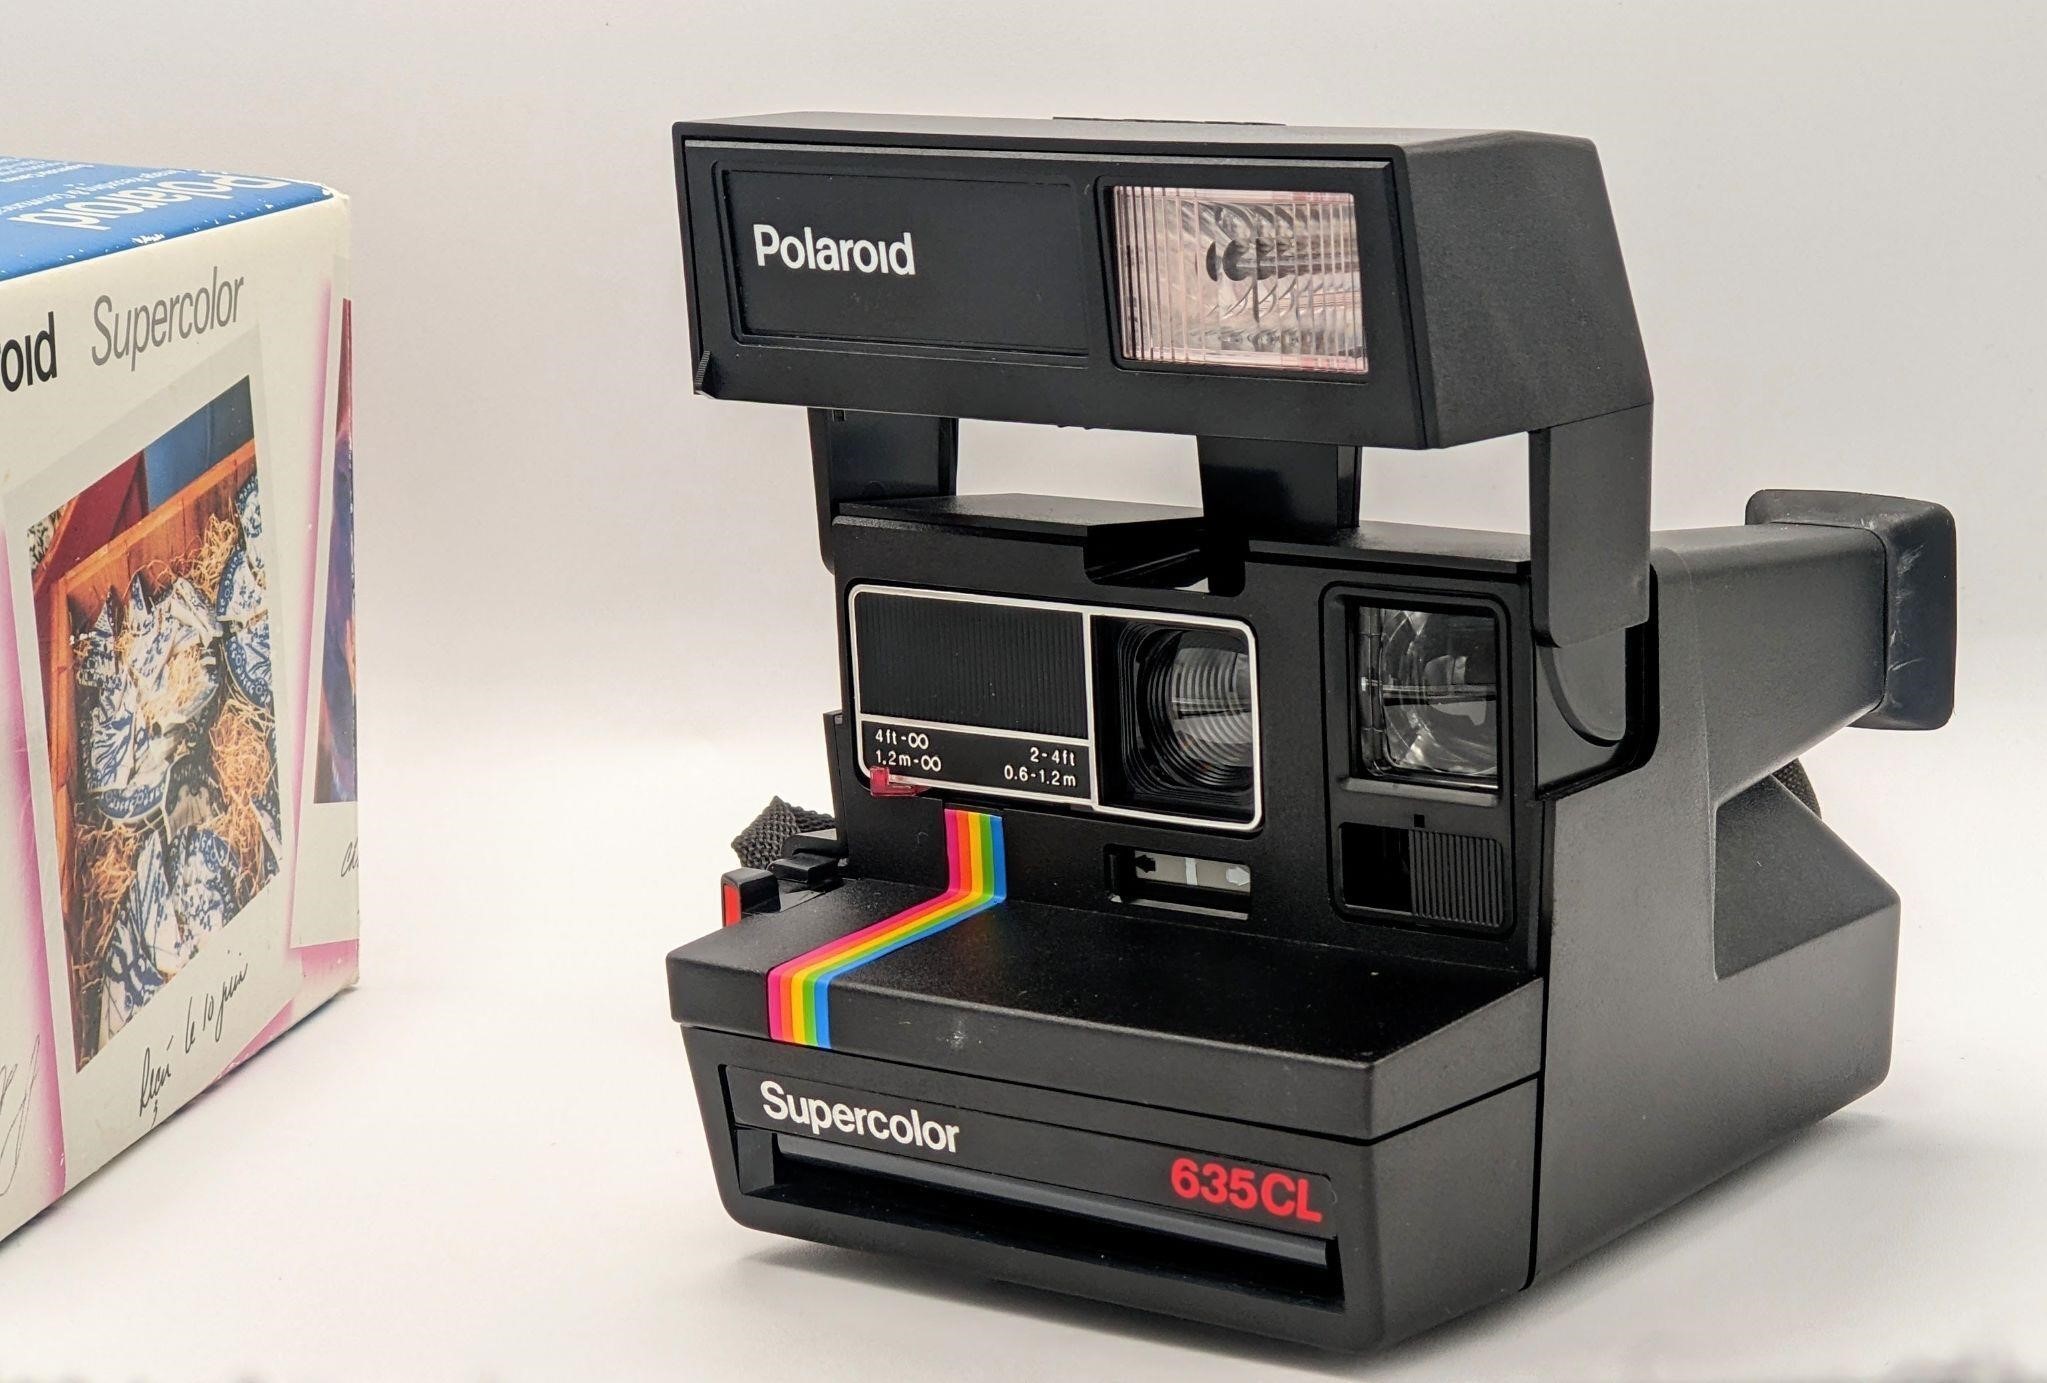 Polaroid Super Color 635CL With Original Box